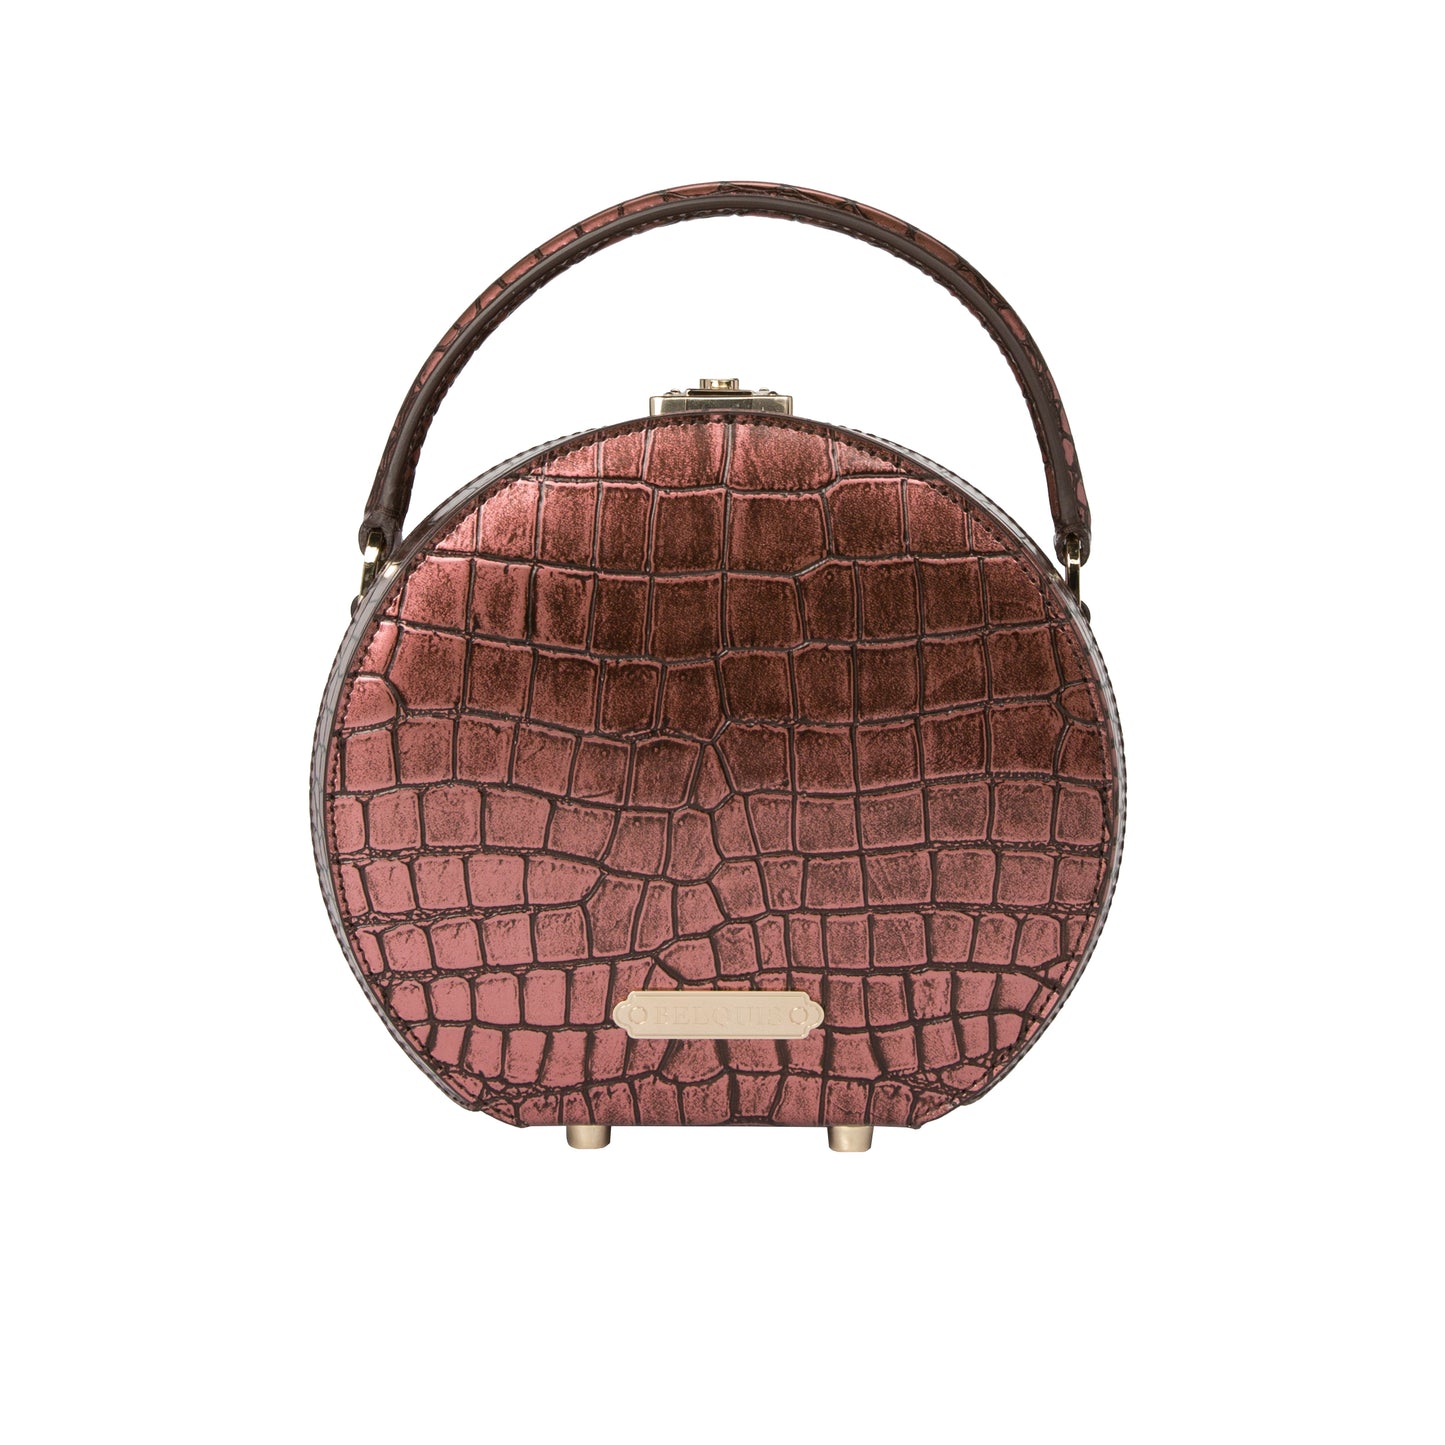 Alina Round Leather Bag